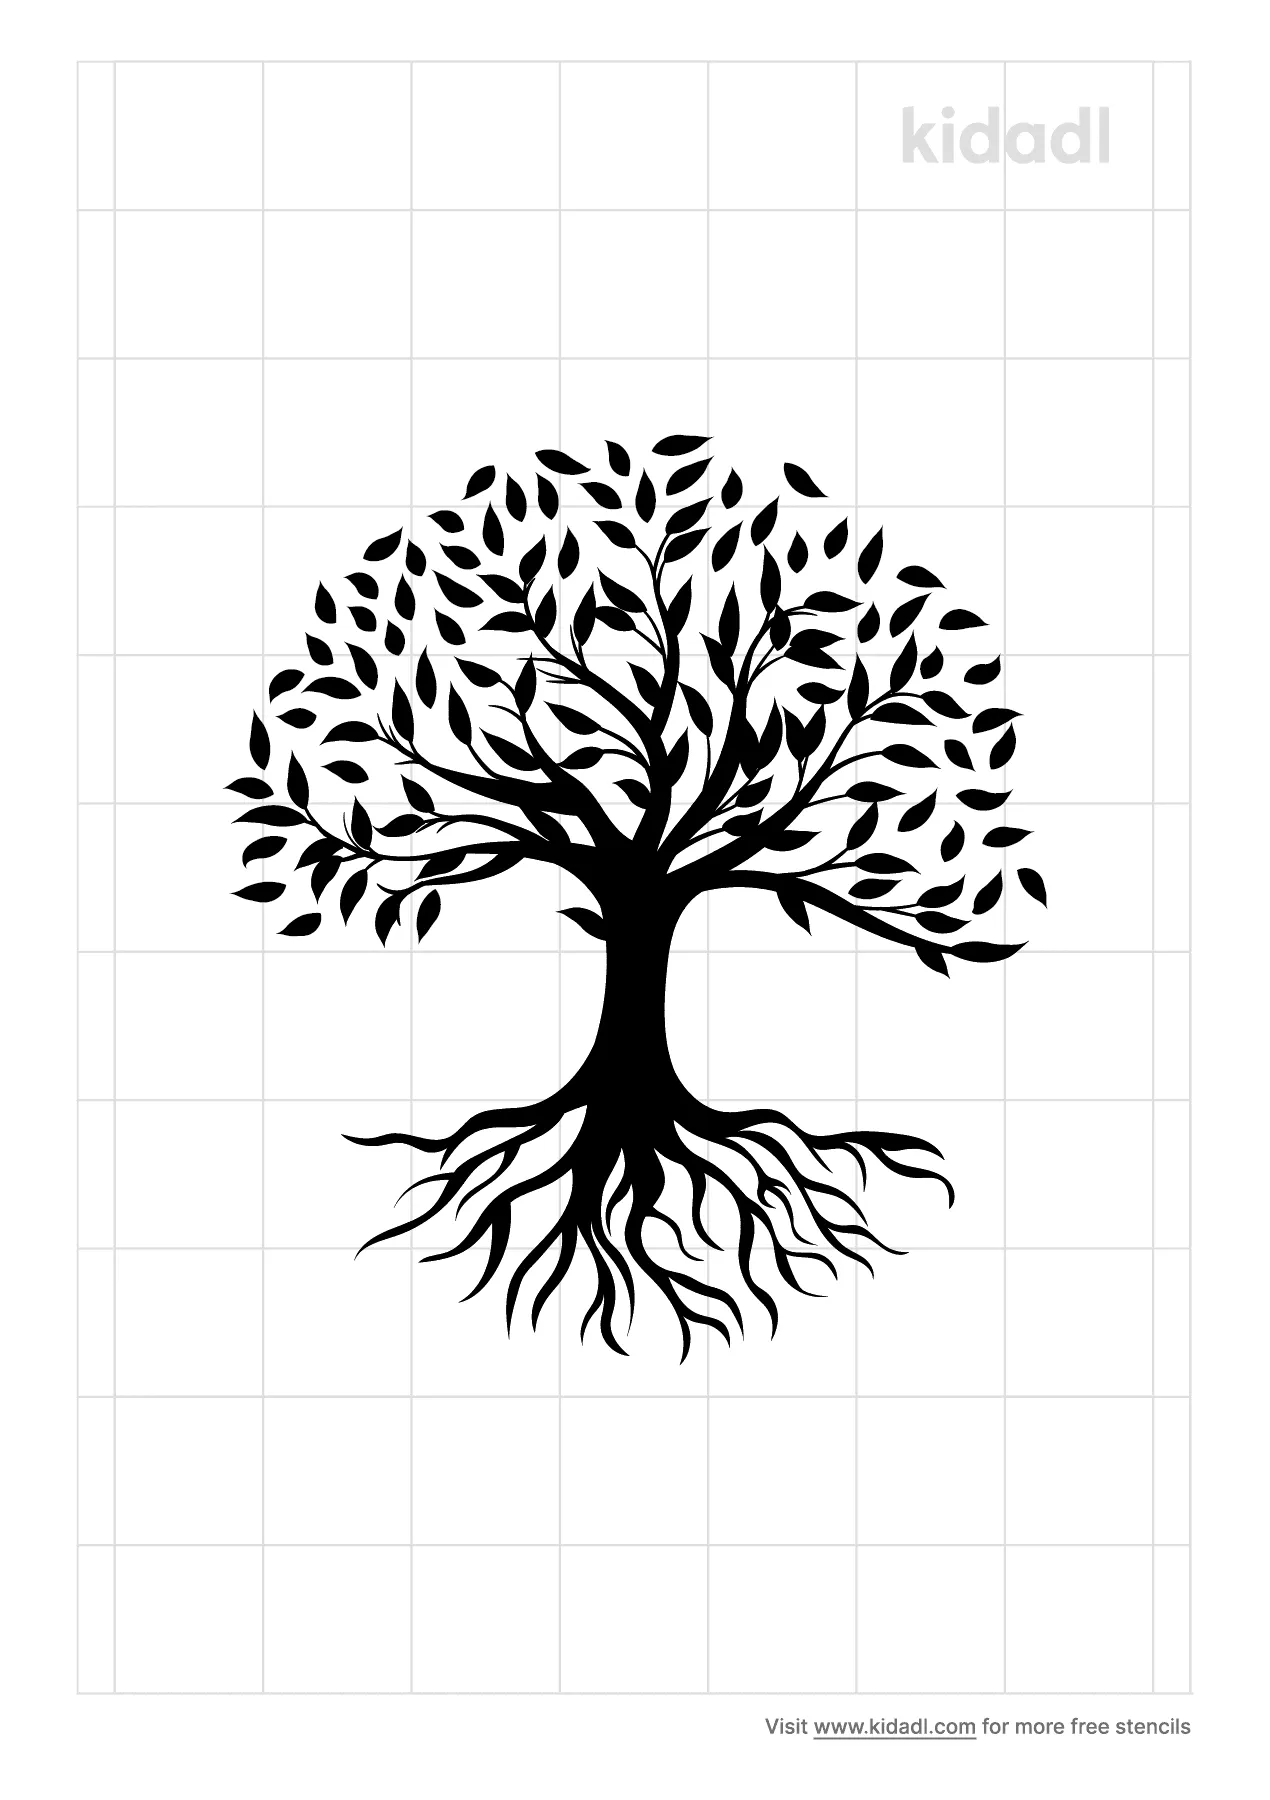 simple tree of life stencils free printable plants stencils kidadl and plants stencils free printable stencils kidadl